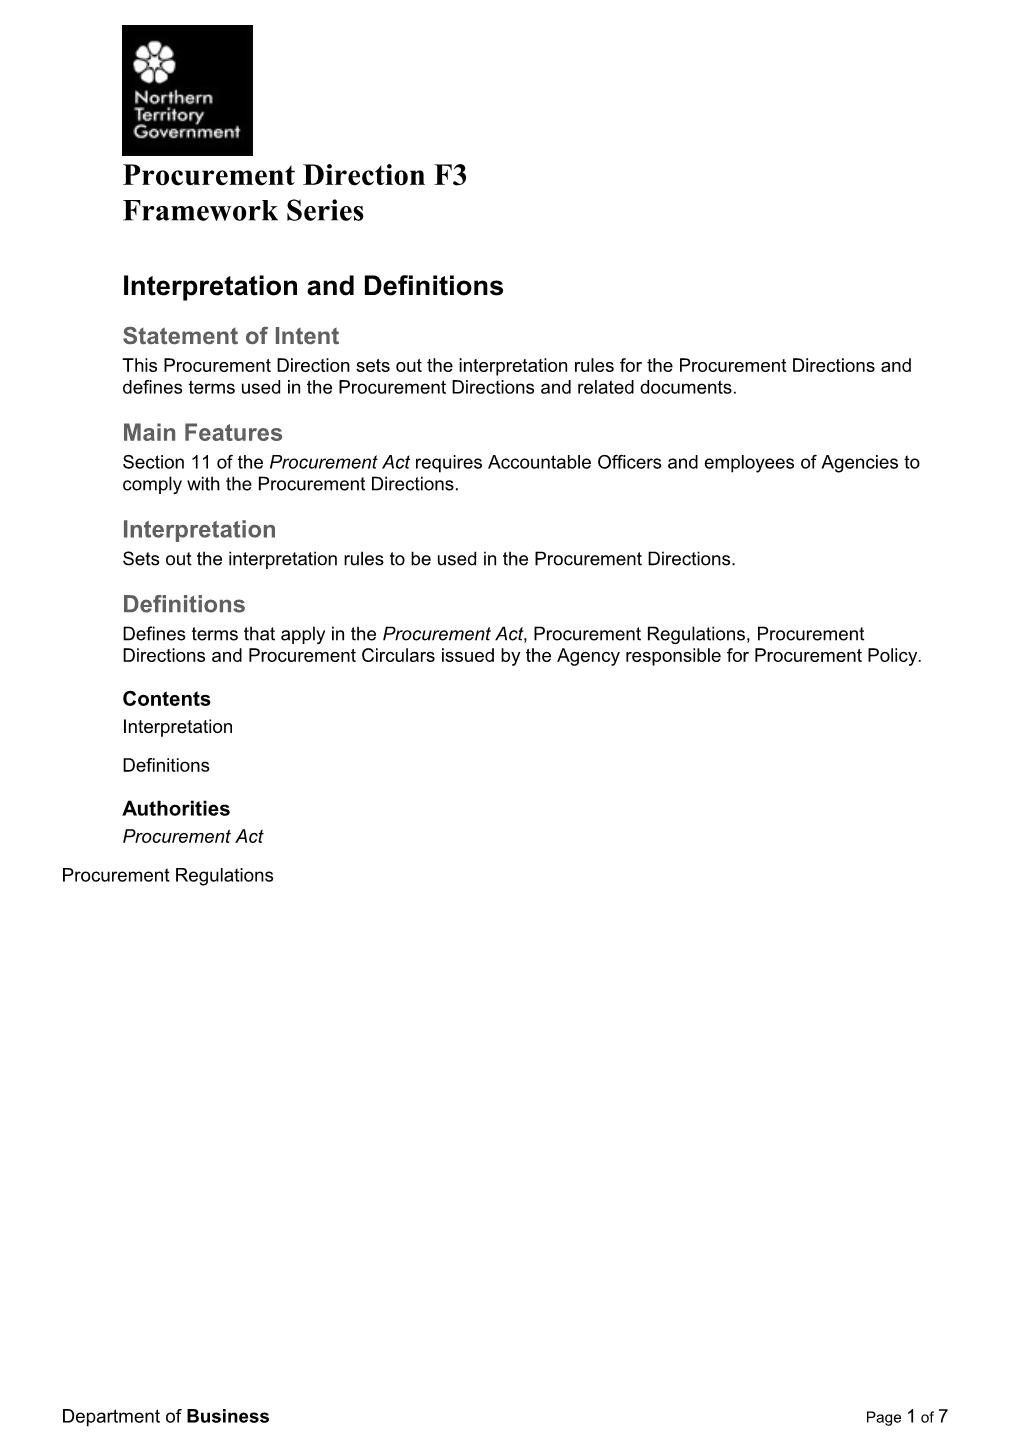 Interpretation and Definitions - F3